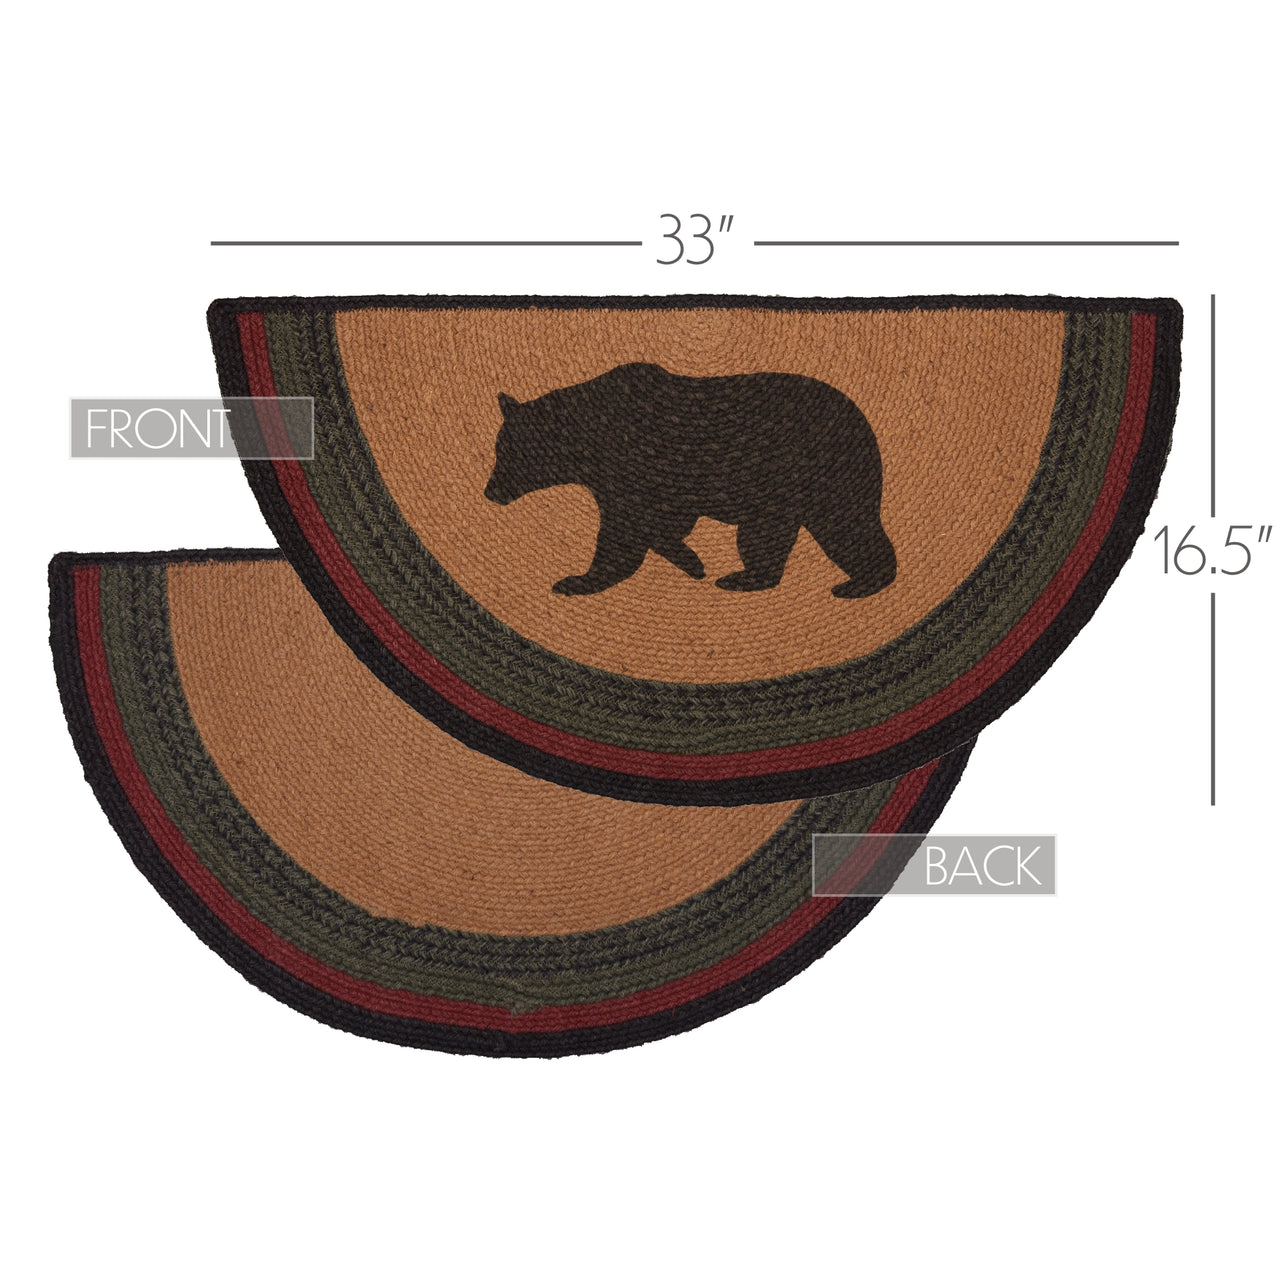 Wyatt Stenciled Bear Jute Braided Rug Half Circle 16.5"x33" with Rug Pad VHC Brands